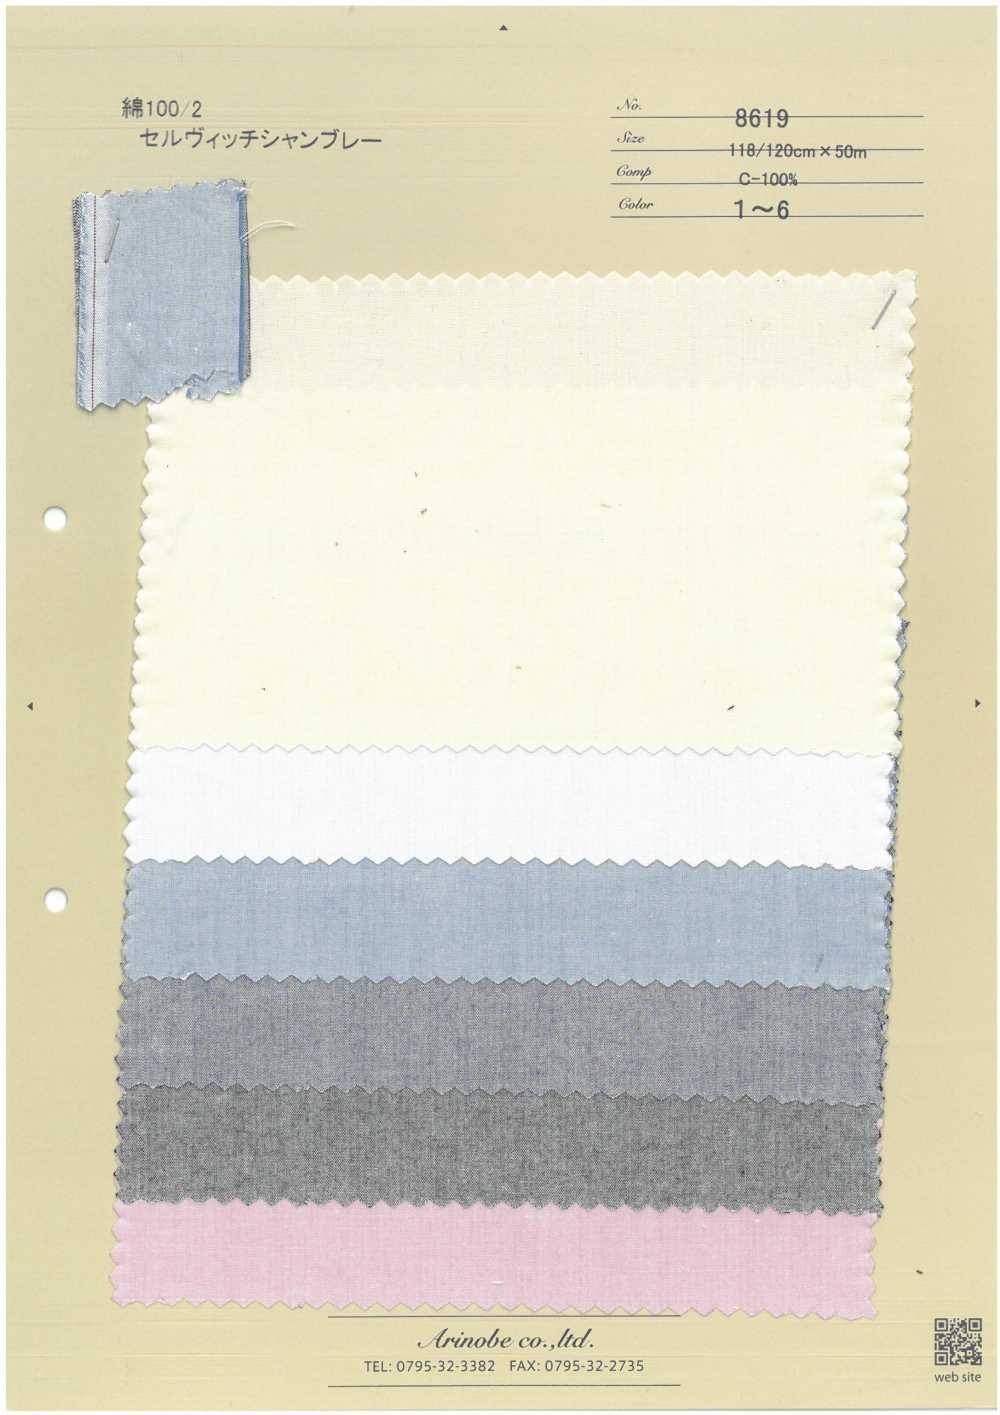 8619 Chambray Con Orillo De Algodón 100/2[Fabrica Textil] ARINOBE CO., LTD.